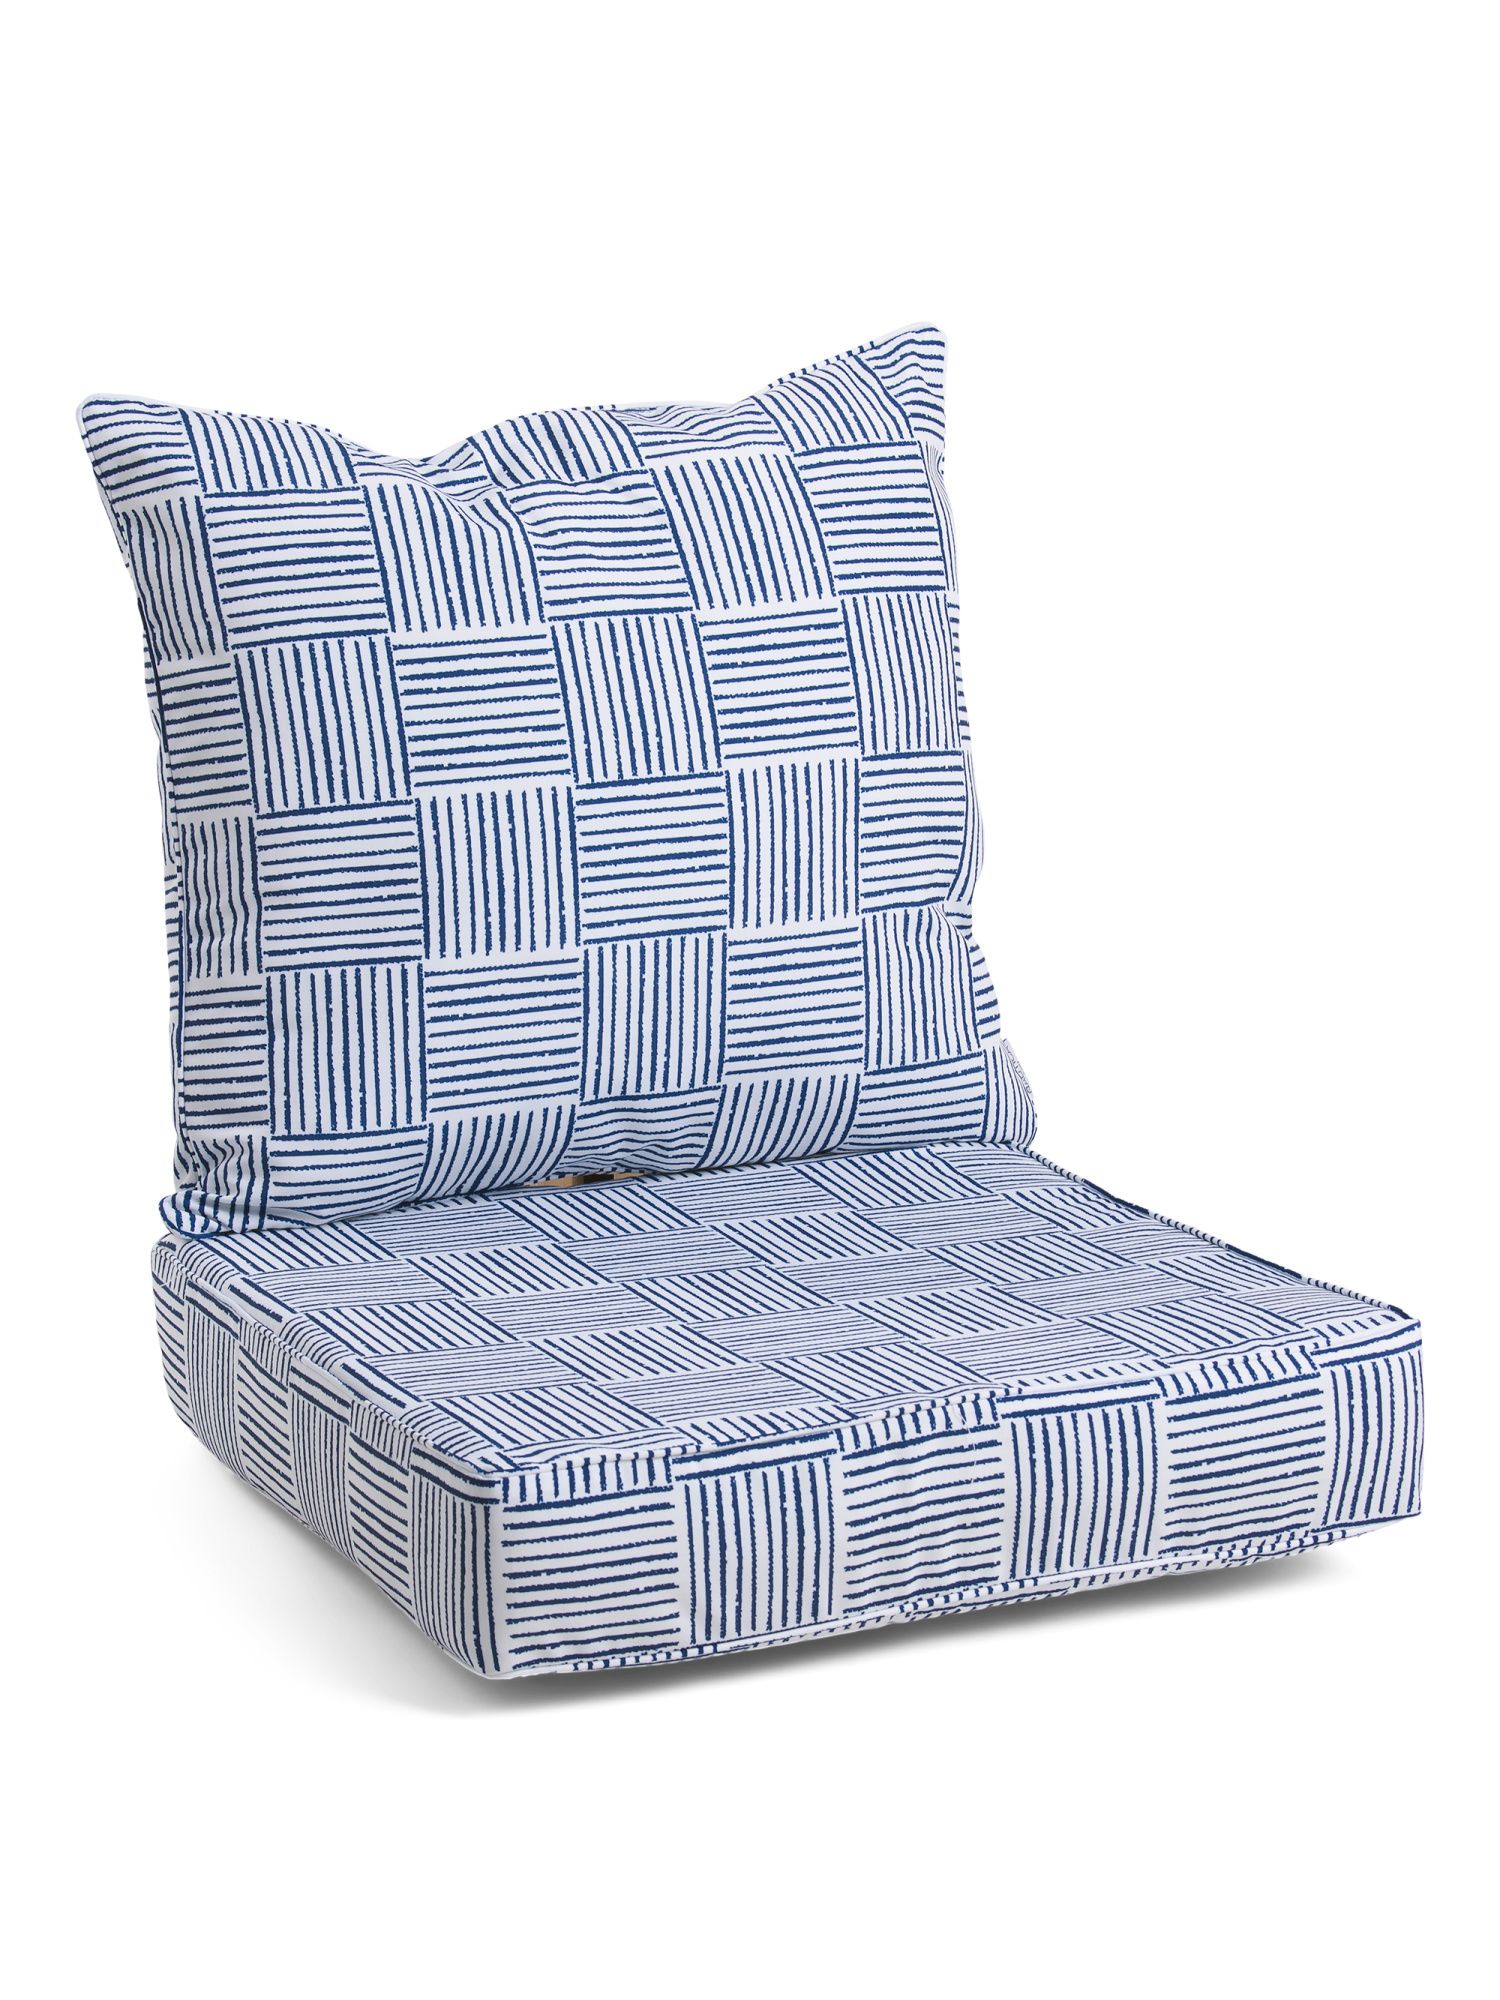 Travis Squares Outdoor Deep Seat Cushion Set | TJ Maxx